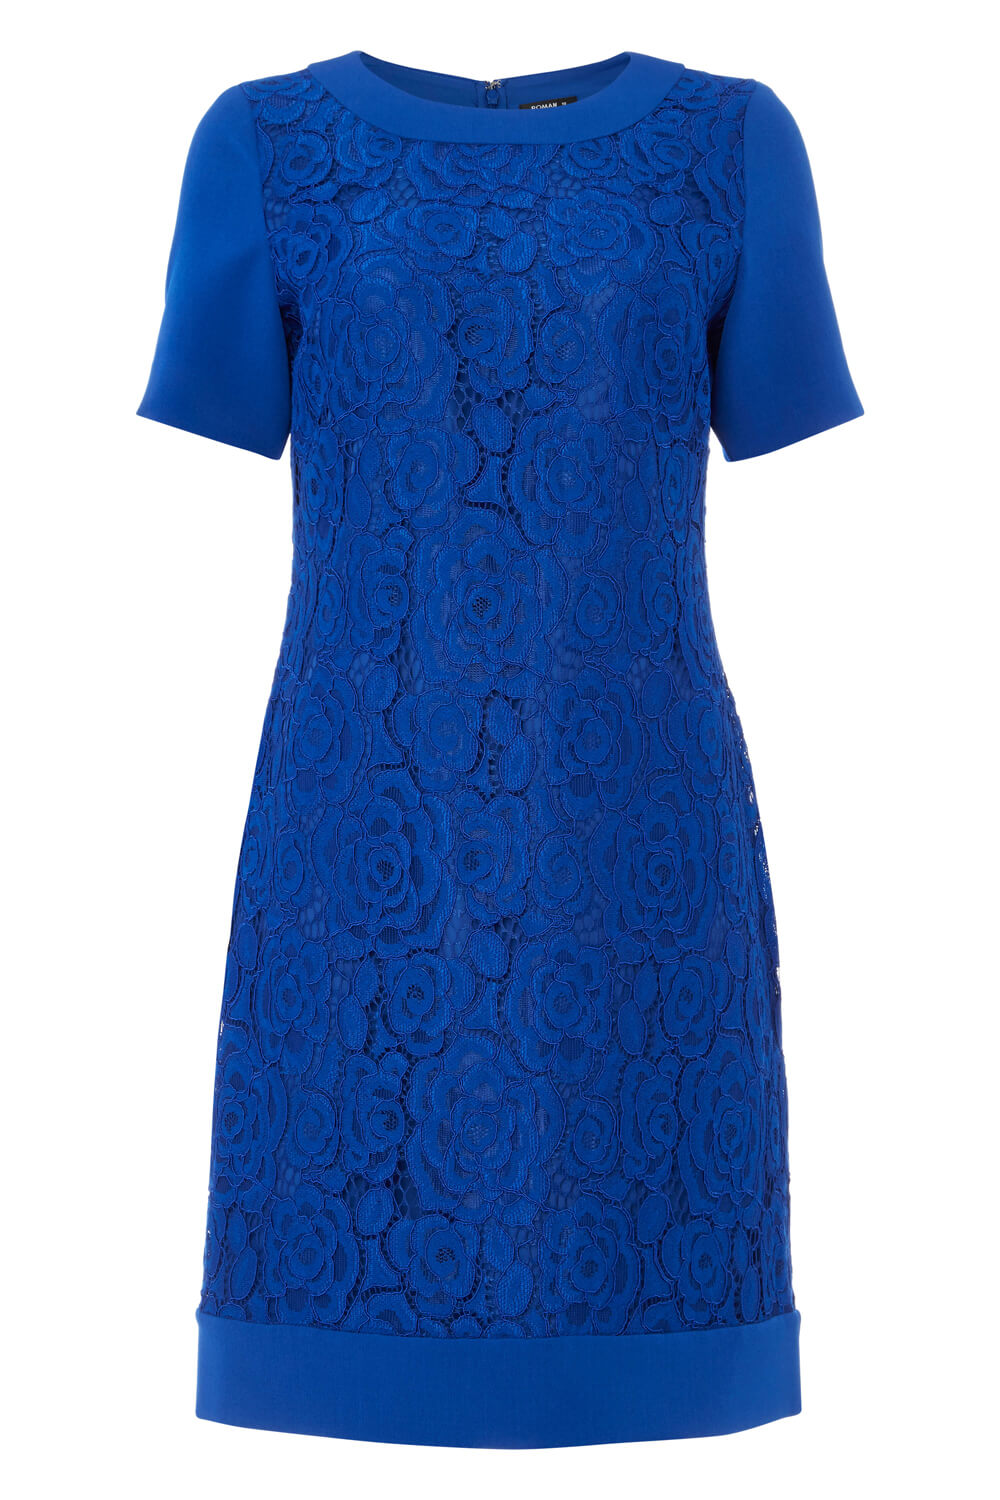 Royal Blue Lace Shift Dress, Image 5 of 5